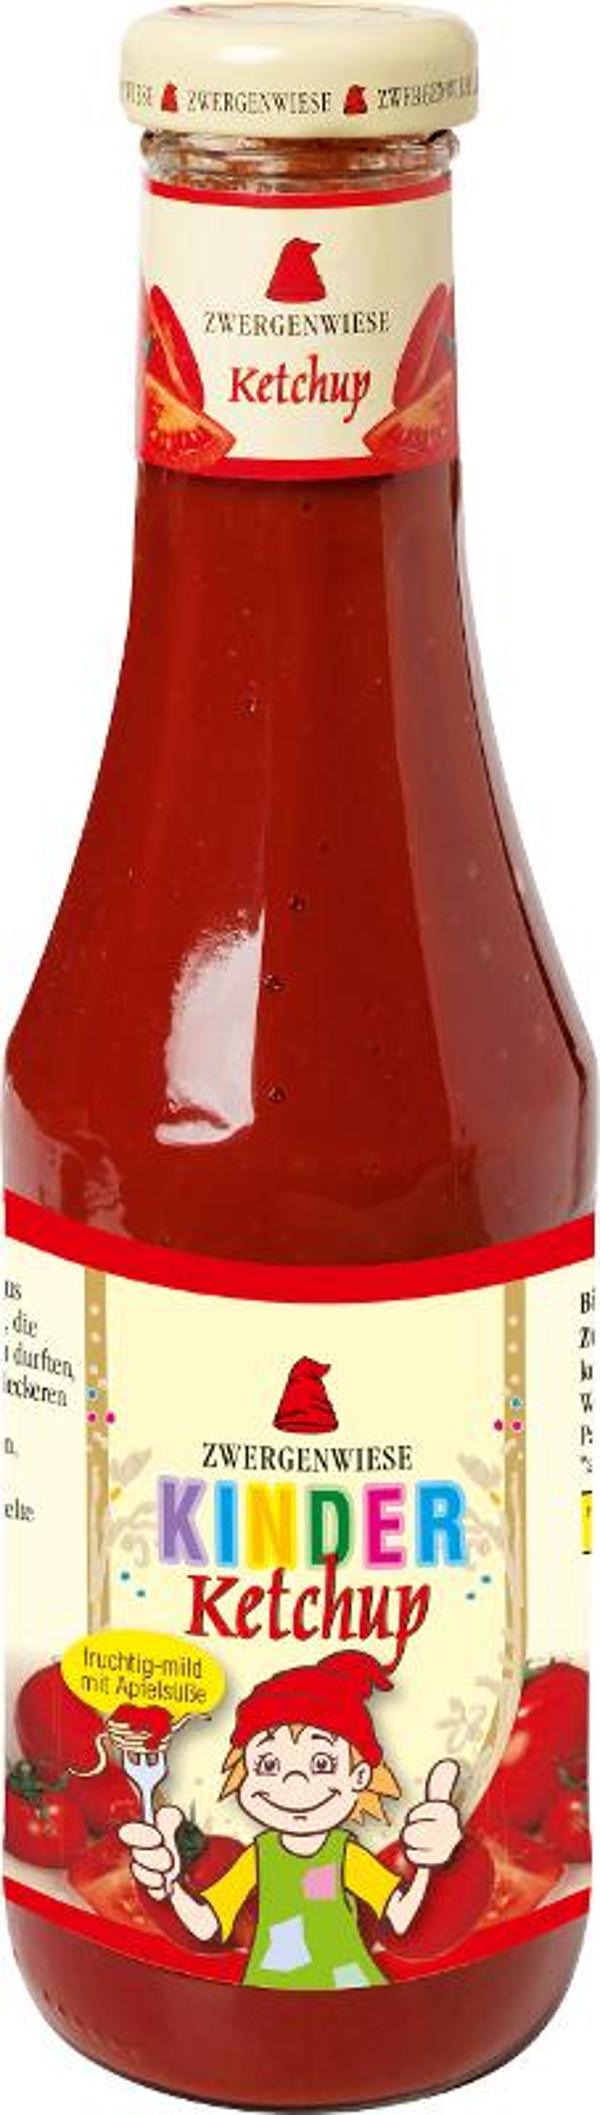 Produktfoto zu Kinder Ketchup 500 ml